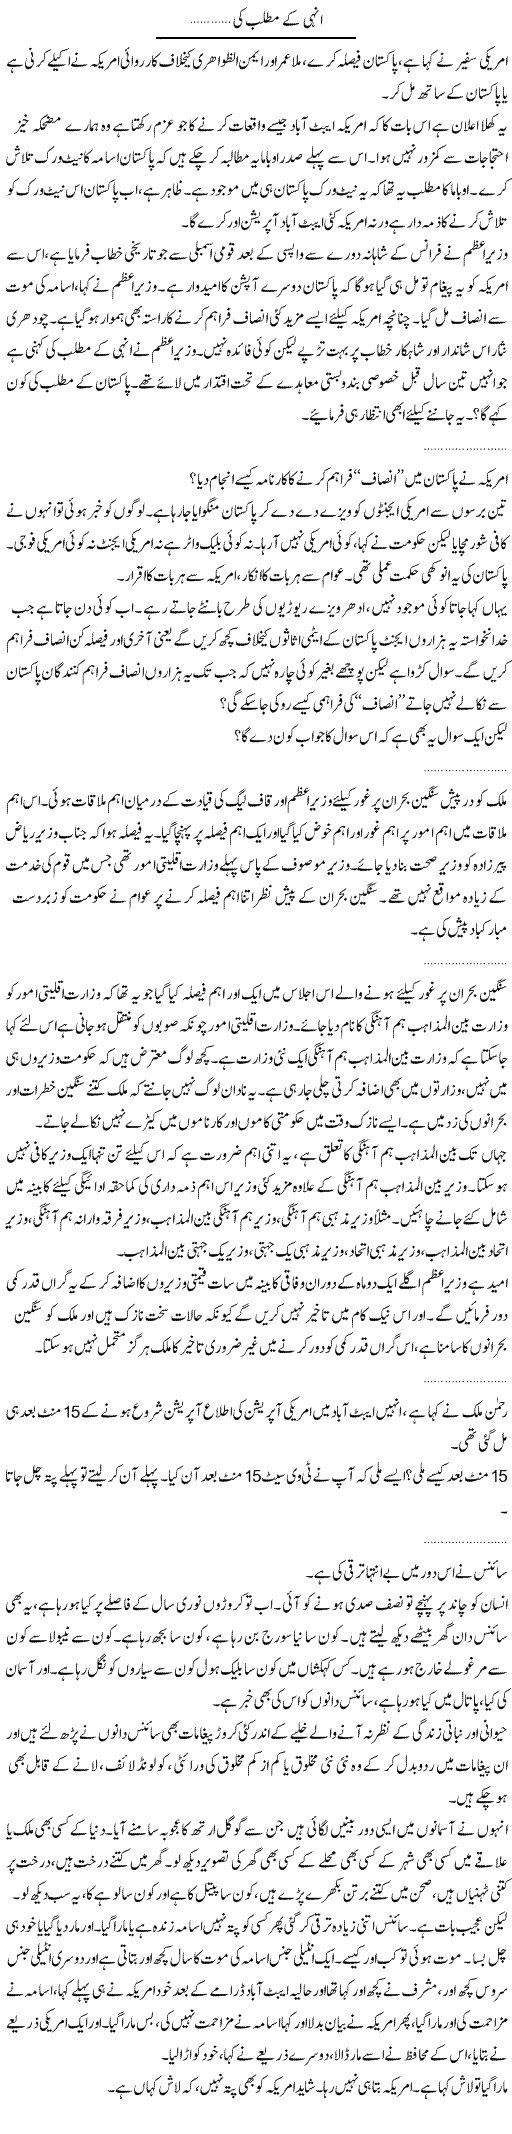 Pakistan Must Be Ready Express Column Abdullah Tariq 11 May 2011